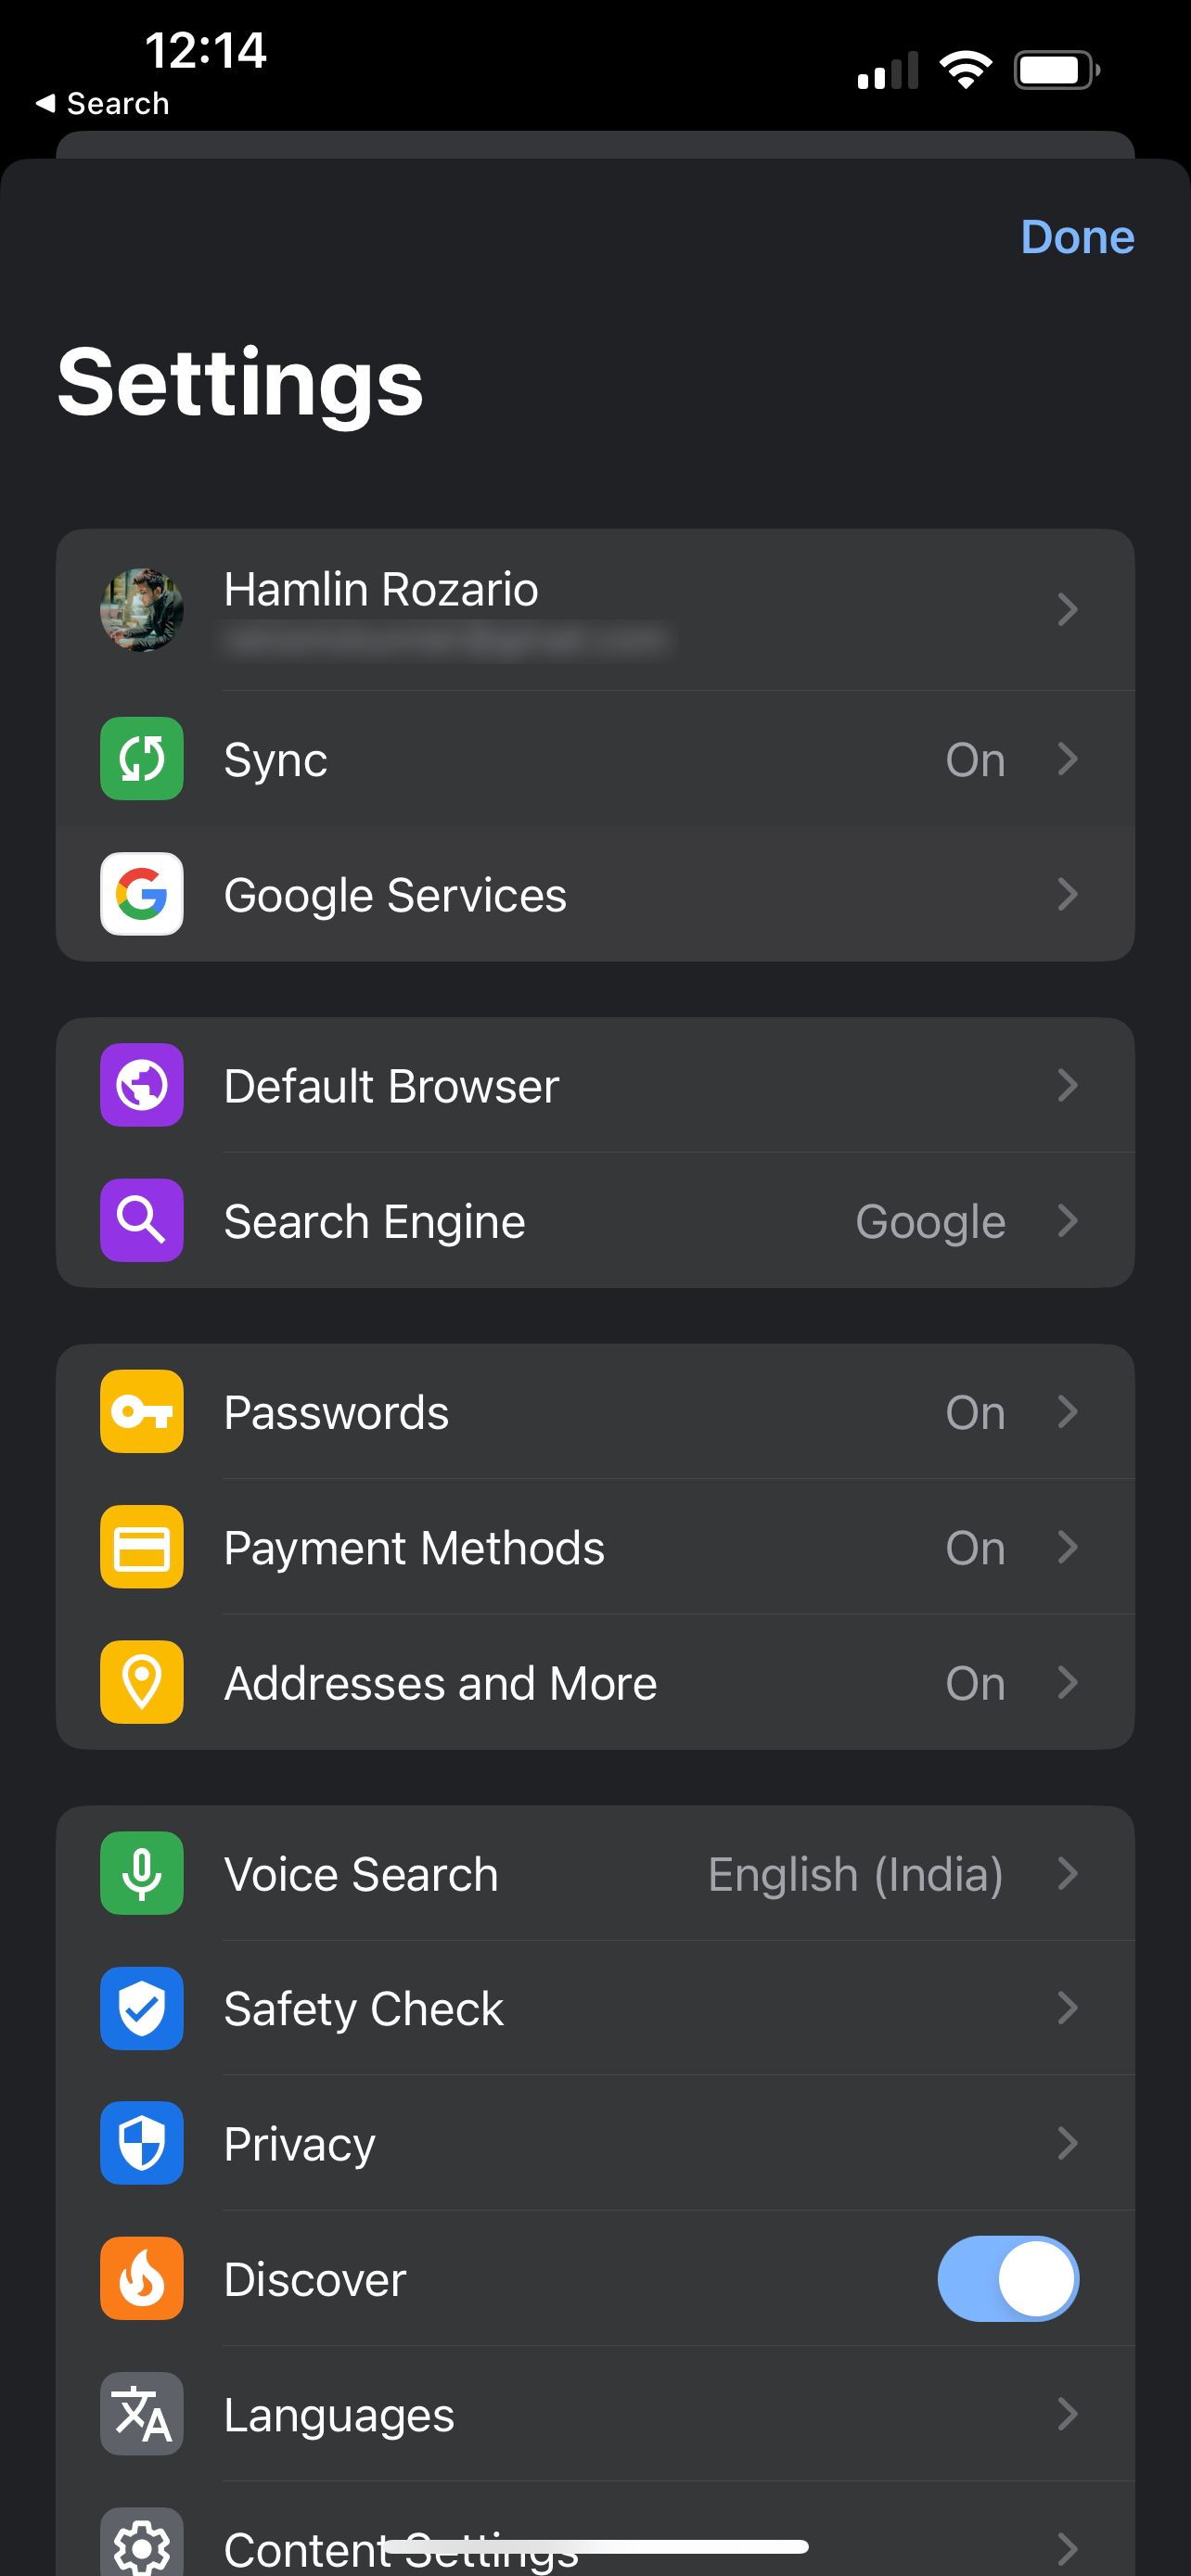 Chrome settings menu in iOS